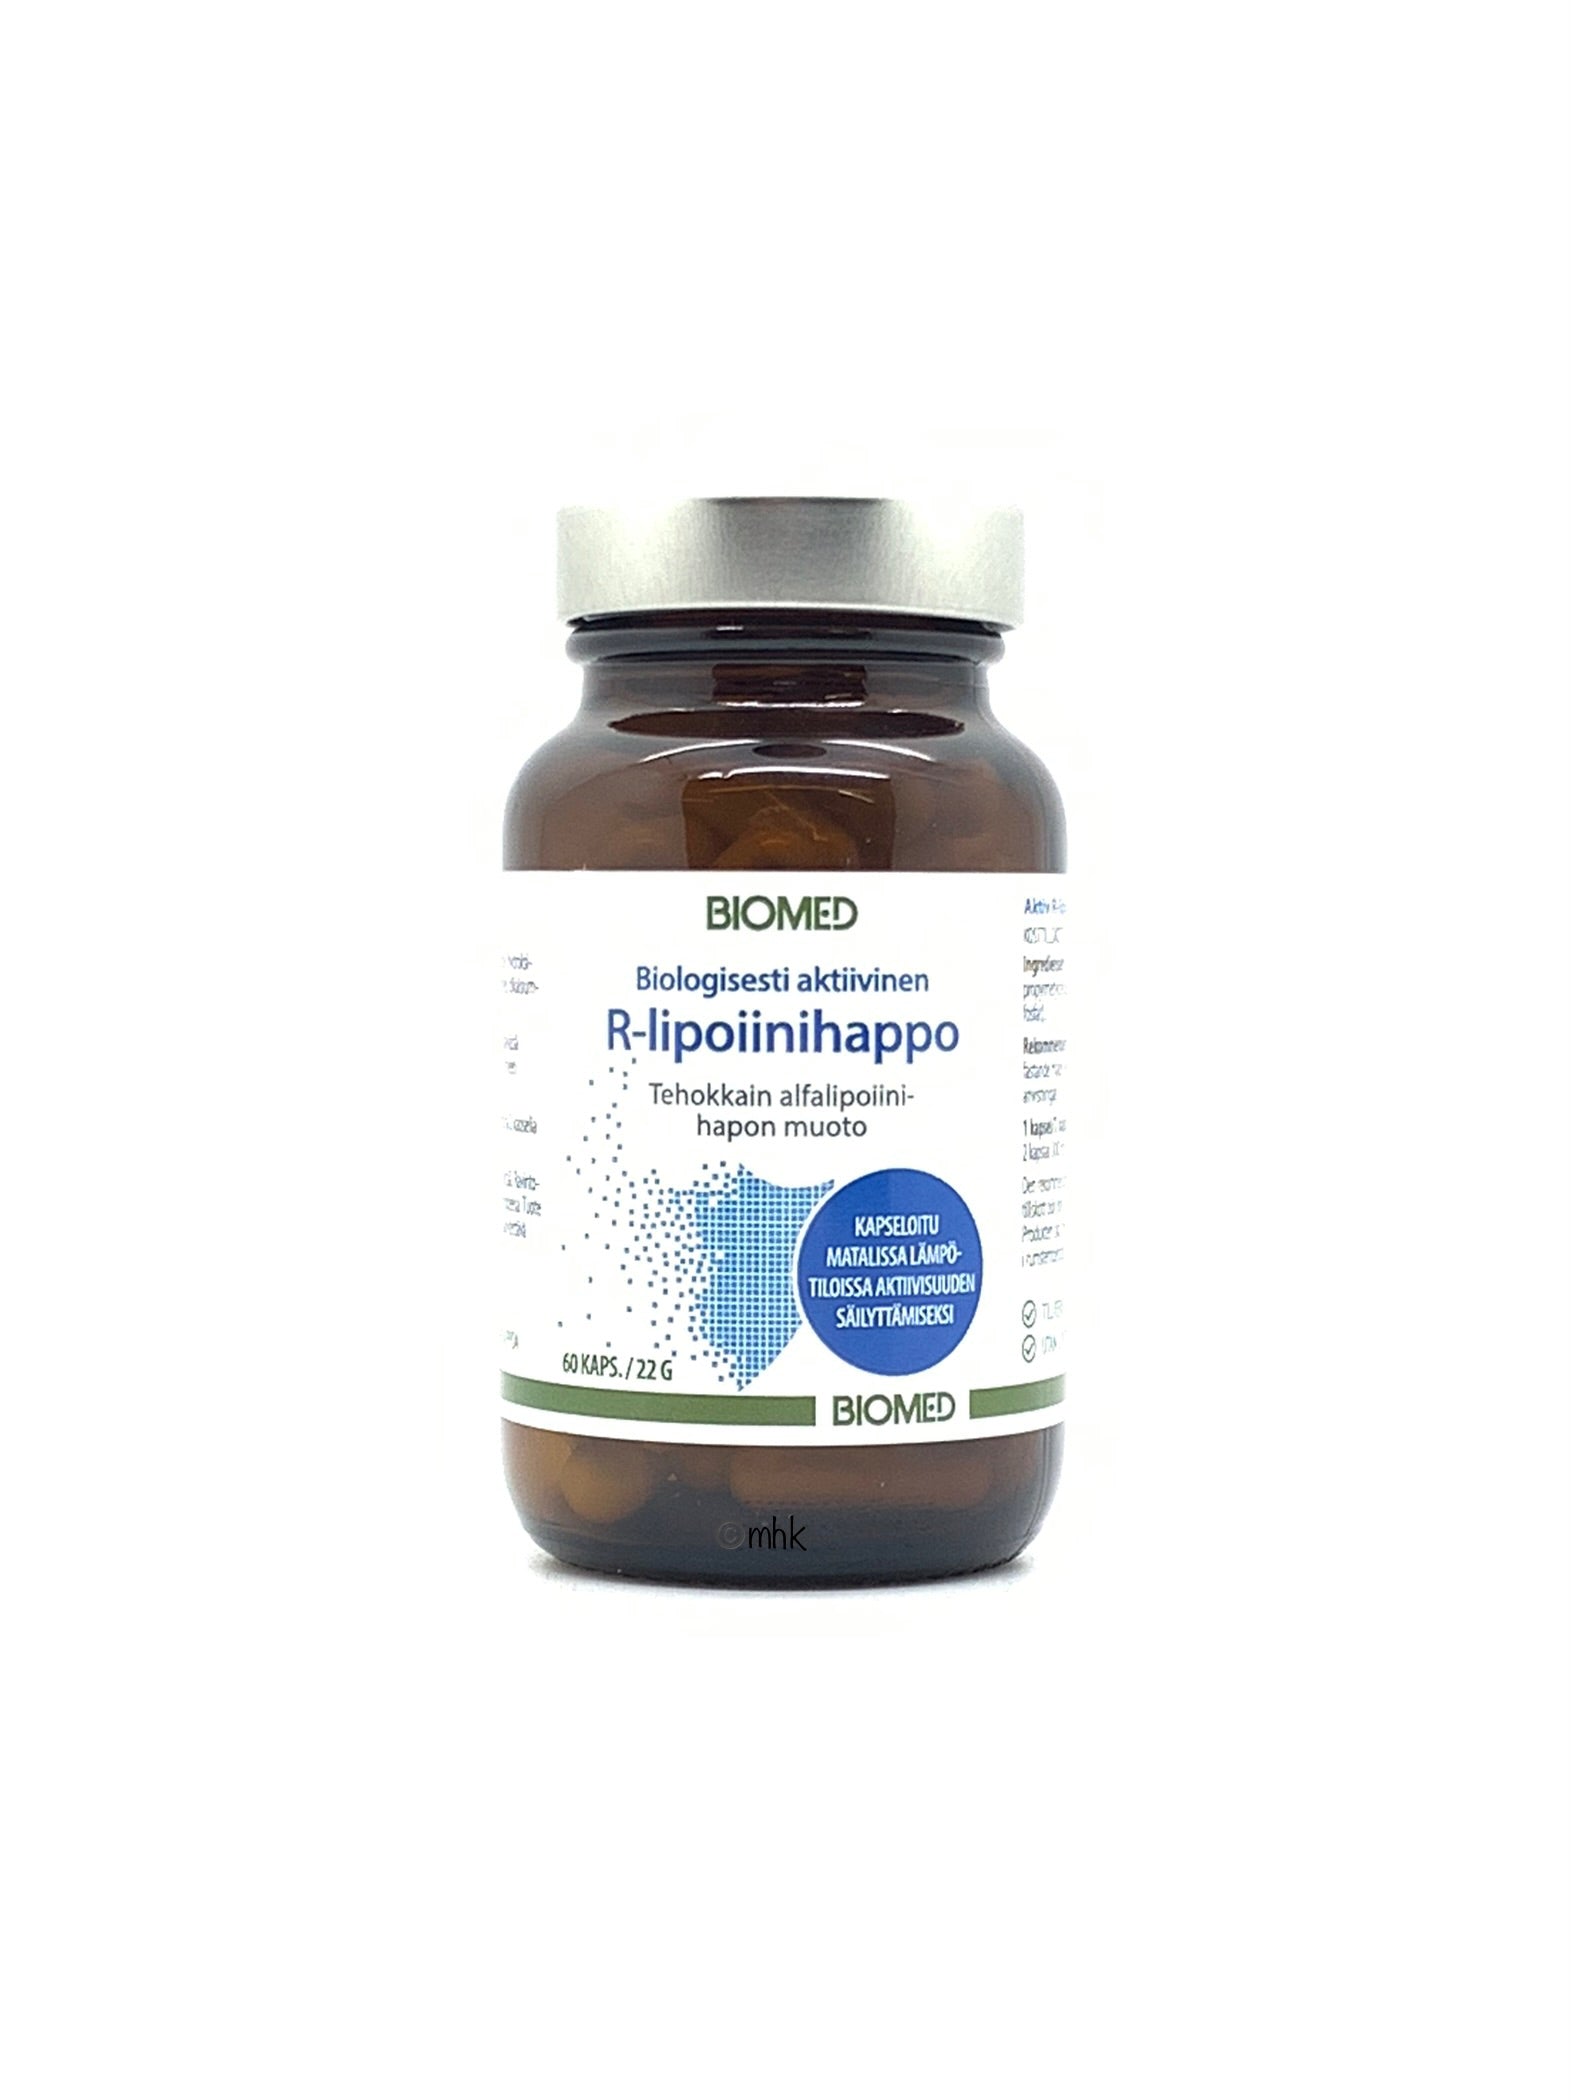 Biomed R-lipoiinihappo 60 kaps.